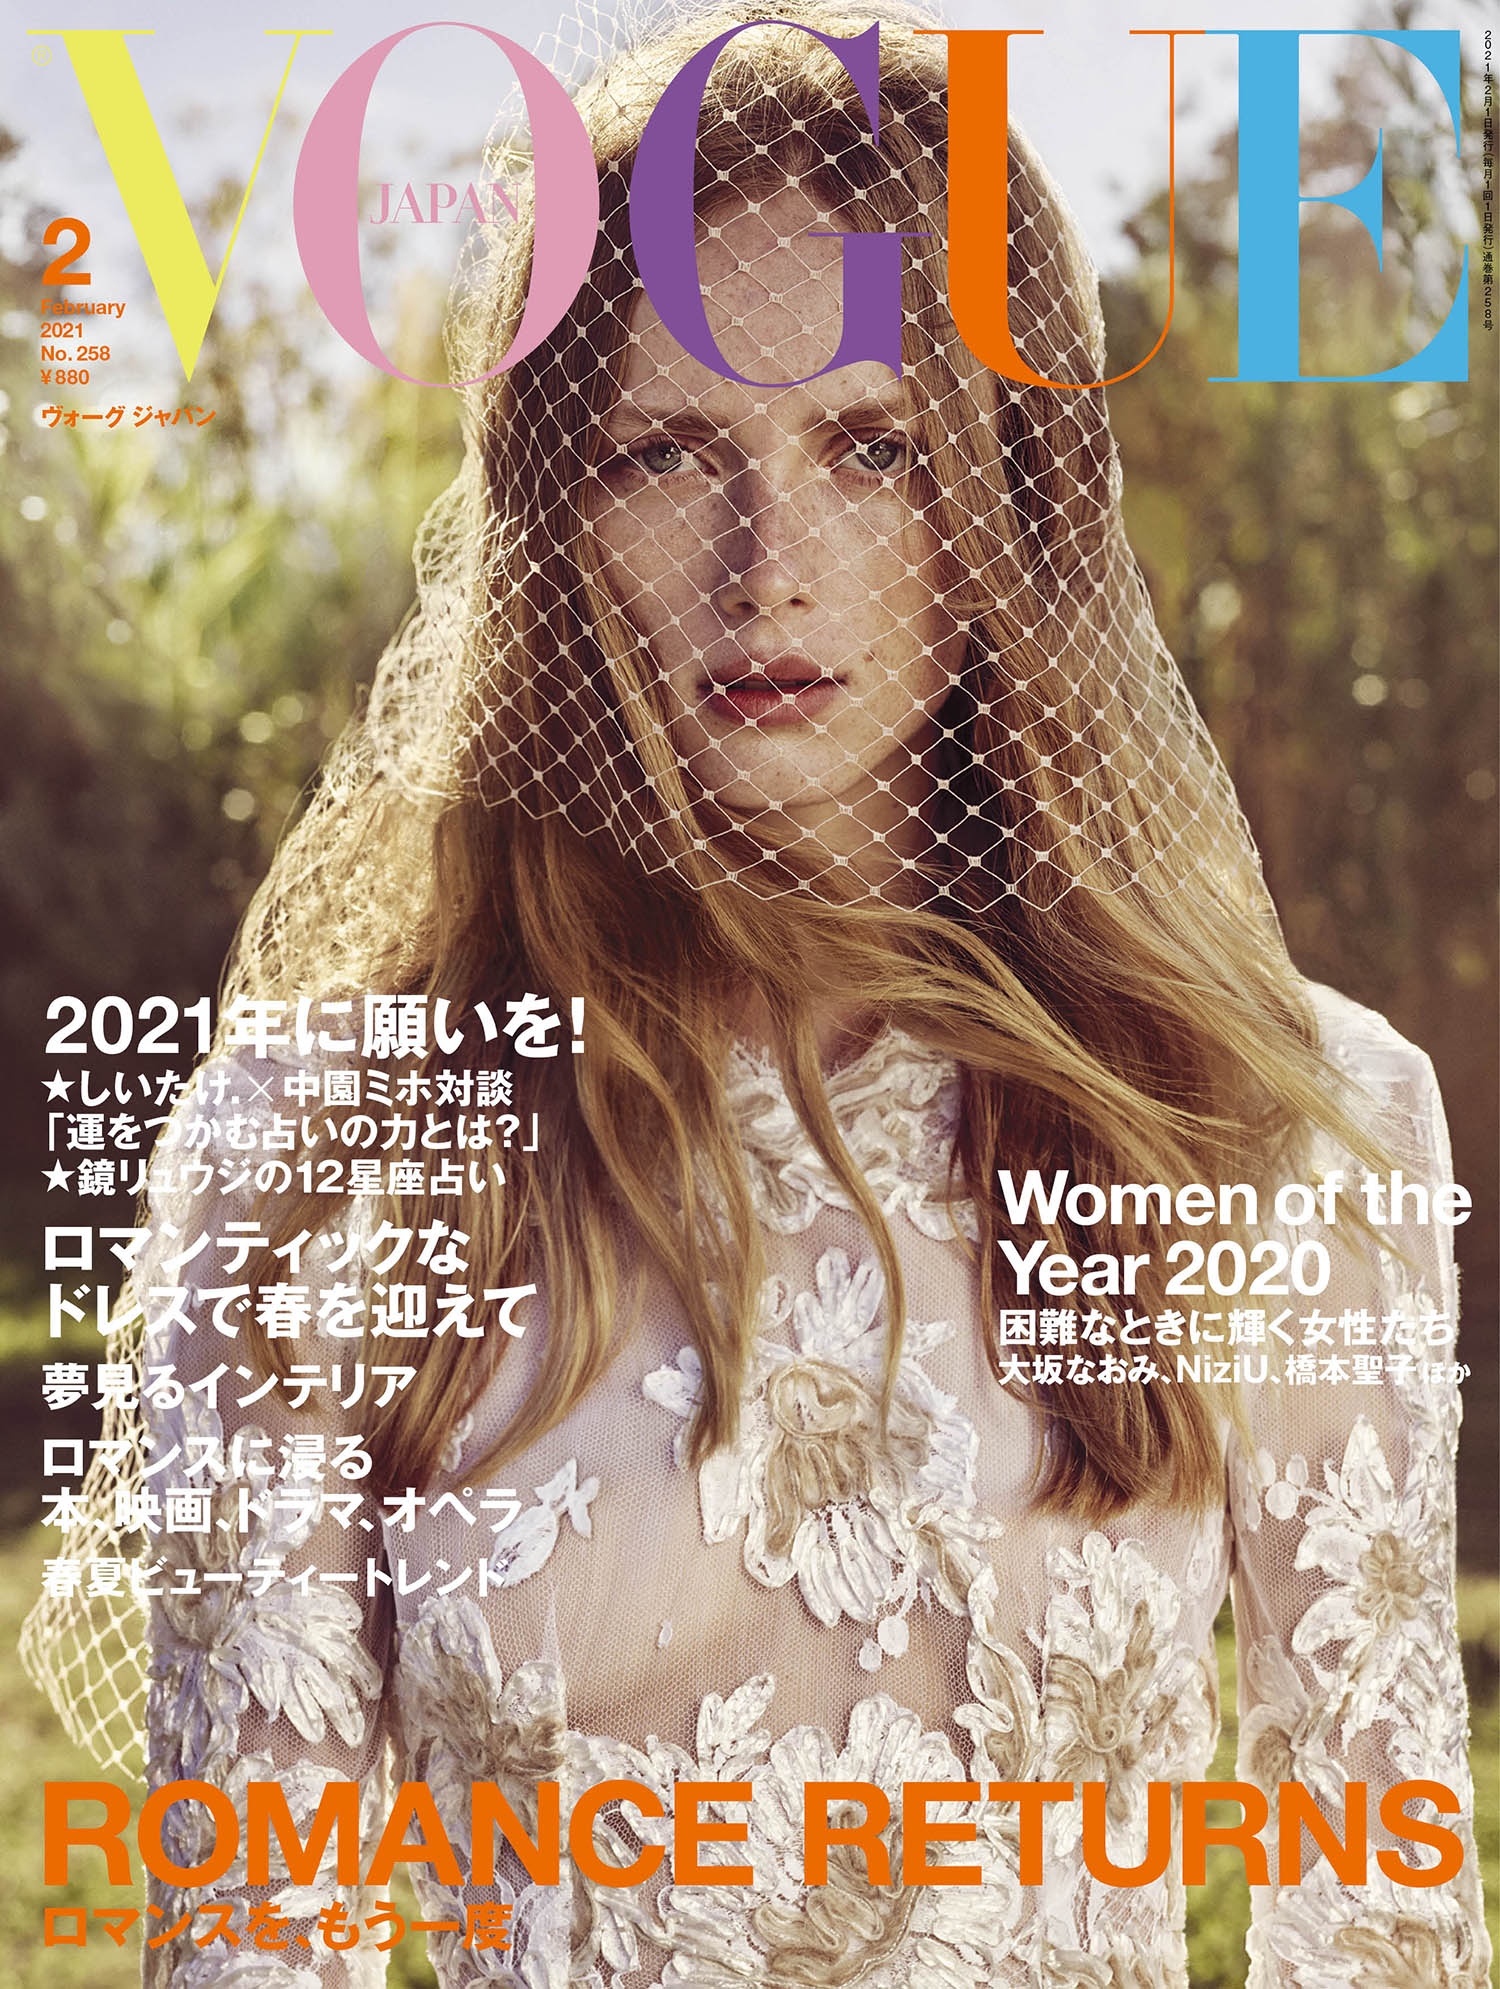 Rianne-van-Rompaey-covers-Vogue-Japan-February-2021-by-Luigi-Iango-1.jpg